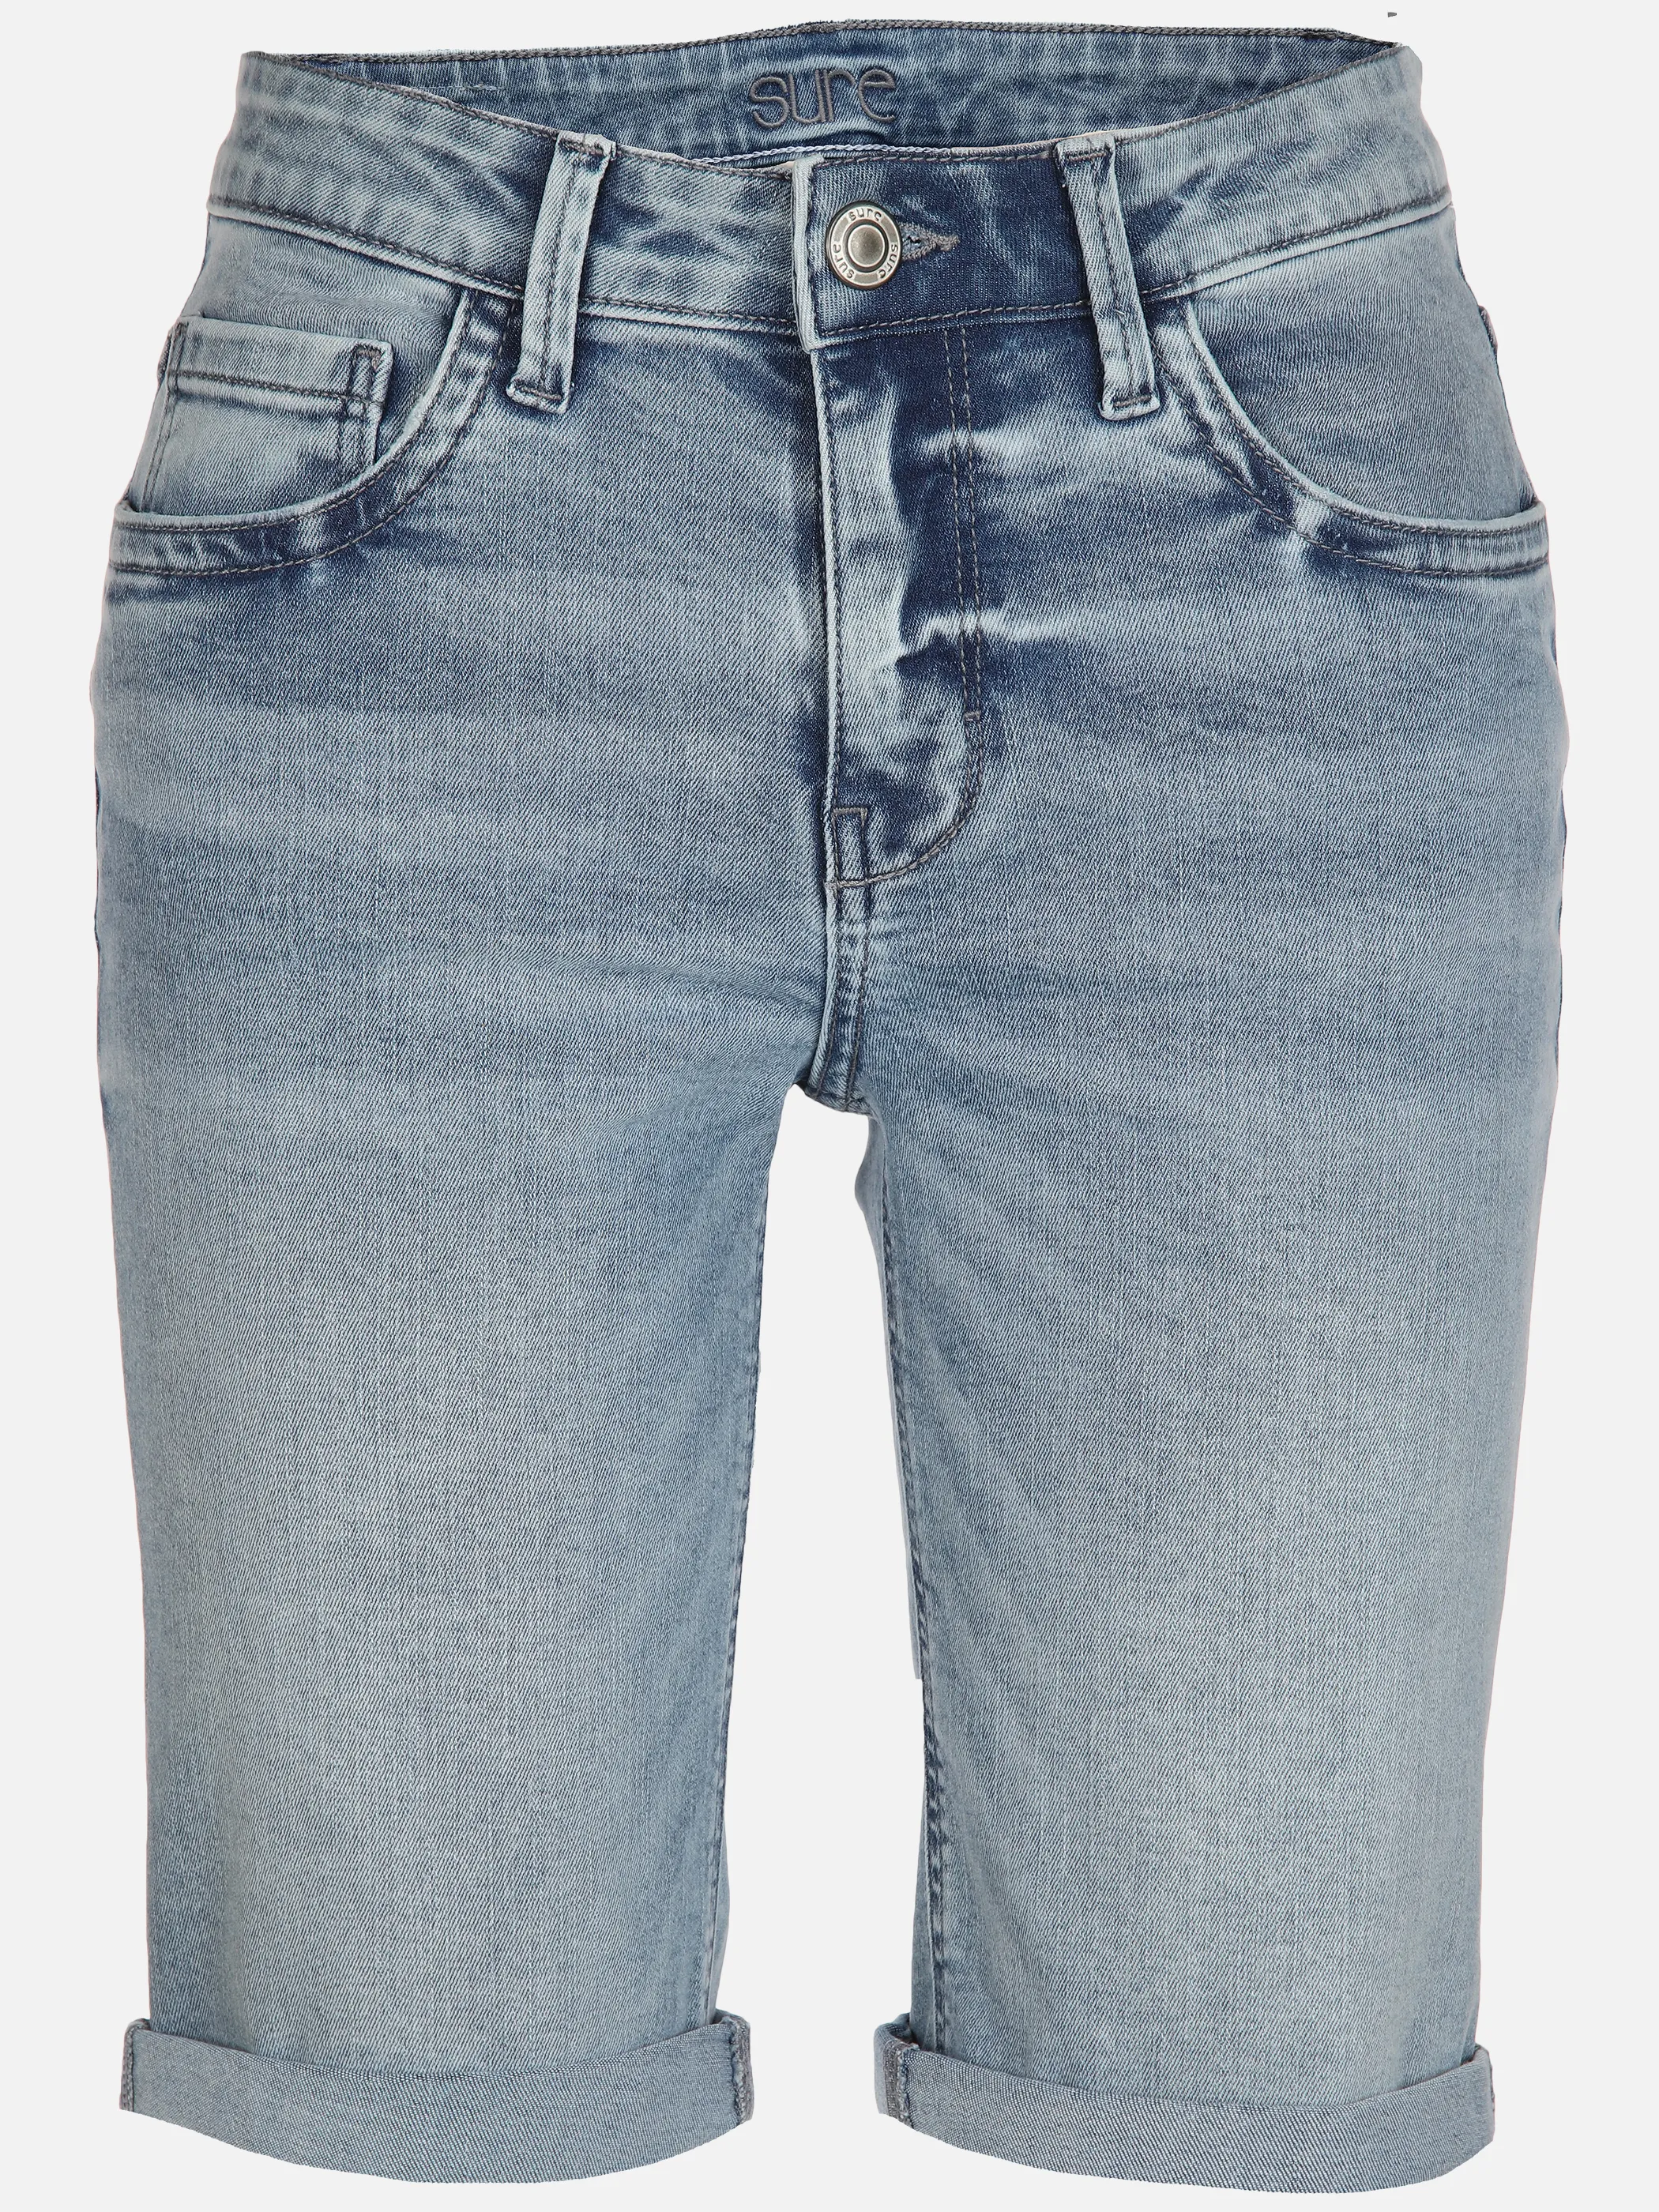 Sure Da-Jeans-Bermuda 5-Pocket Blau 891153 LIGHTBLUE 1